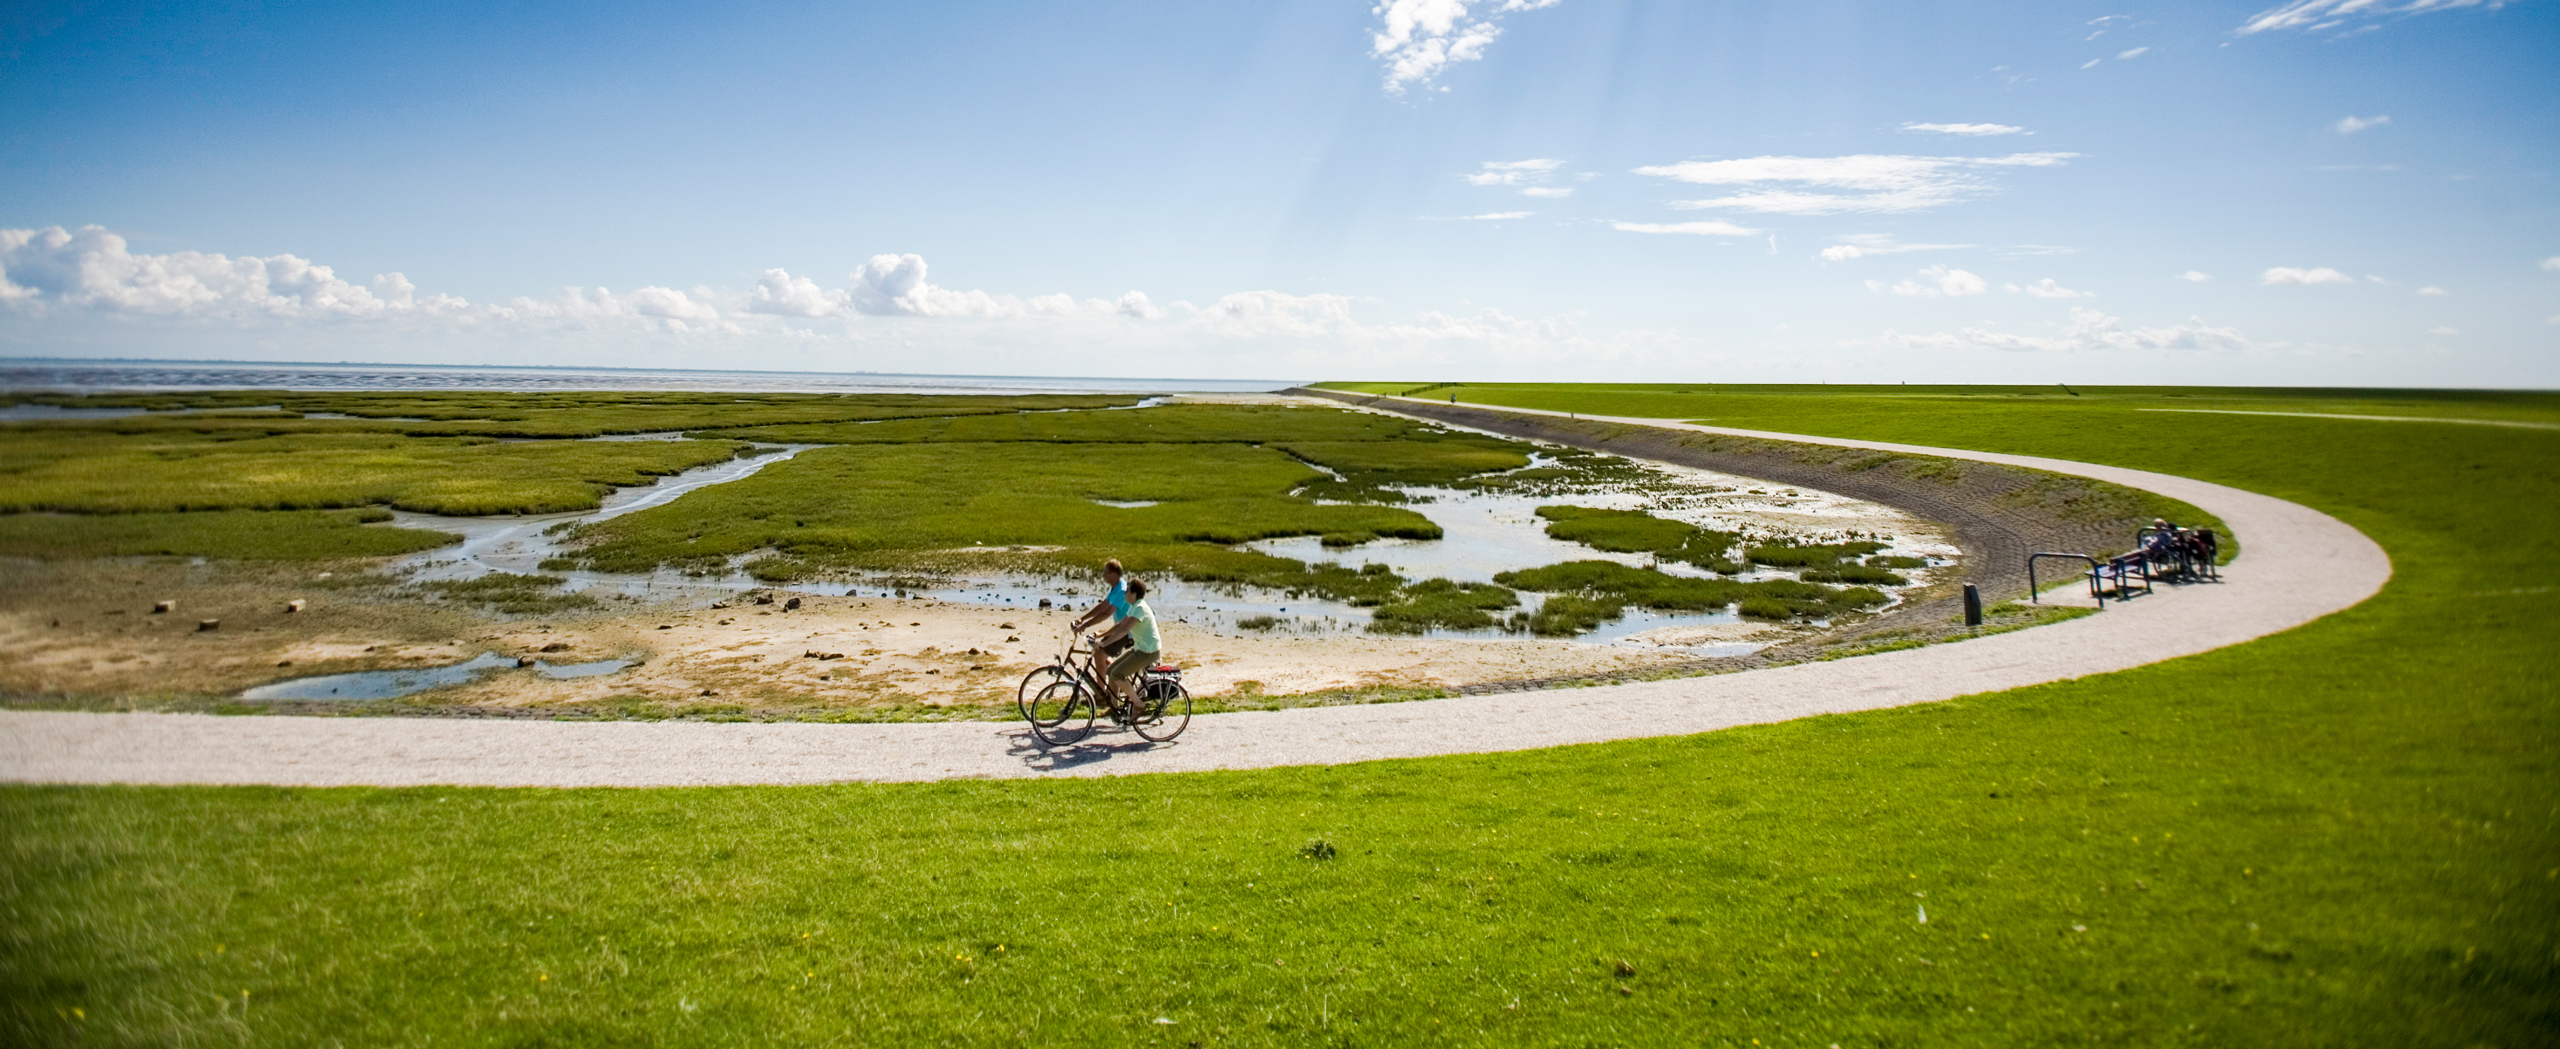 The 11 Frisian Cities Cycling Tour